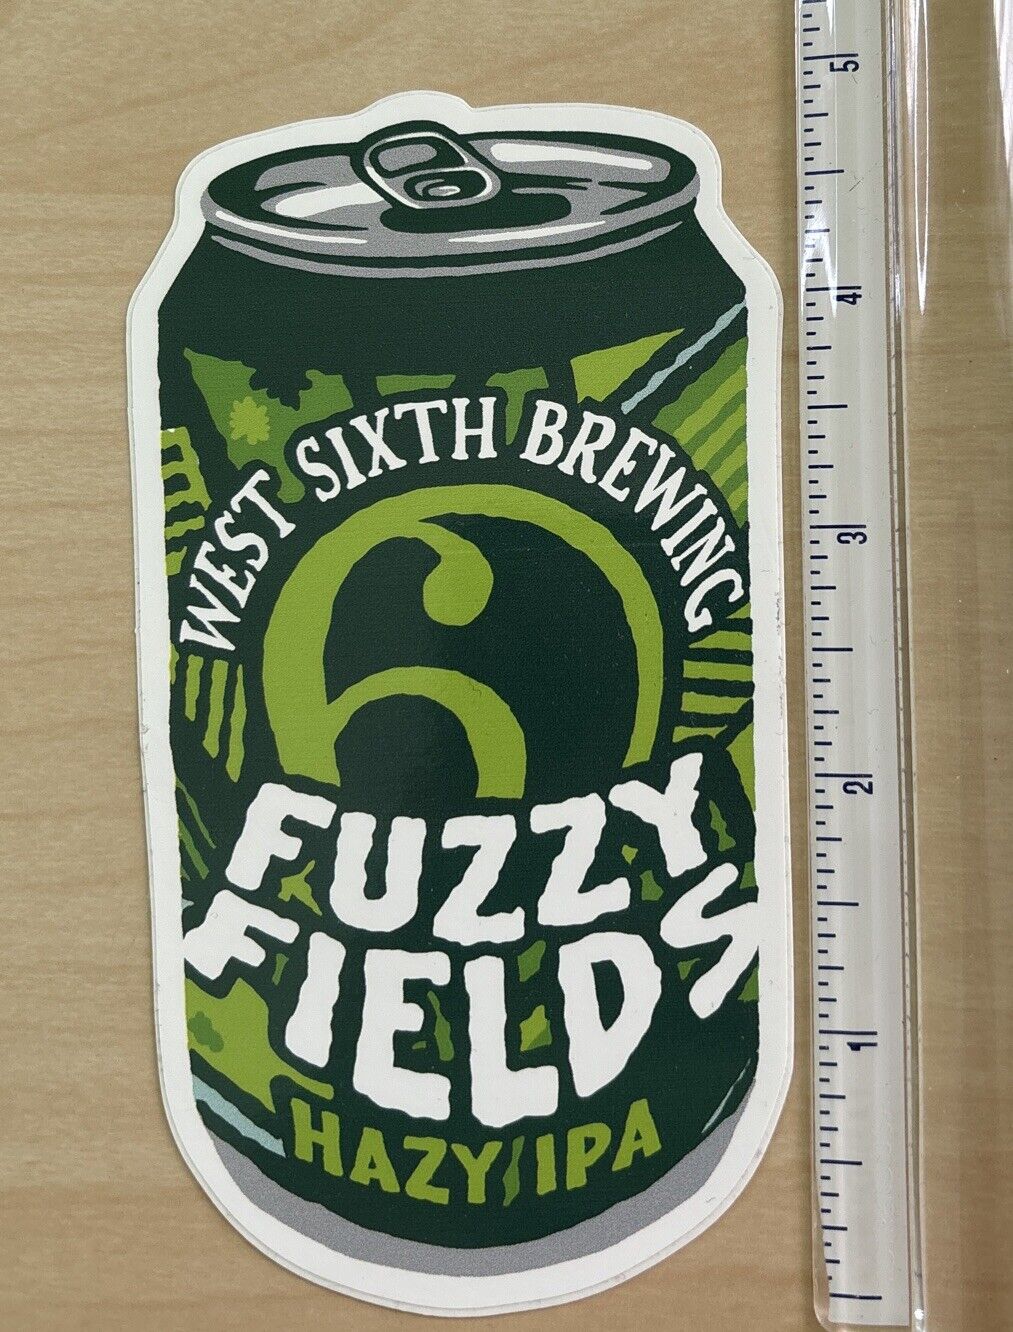 West Sixth Brewing Lexington Kentucky Fuzzy Fields Hazy IPA Beer Sticker Decal